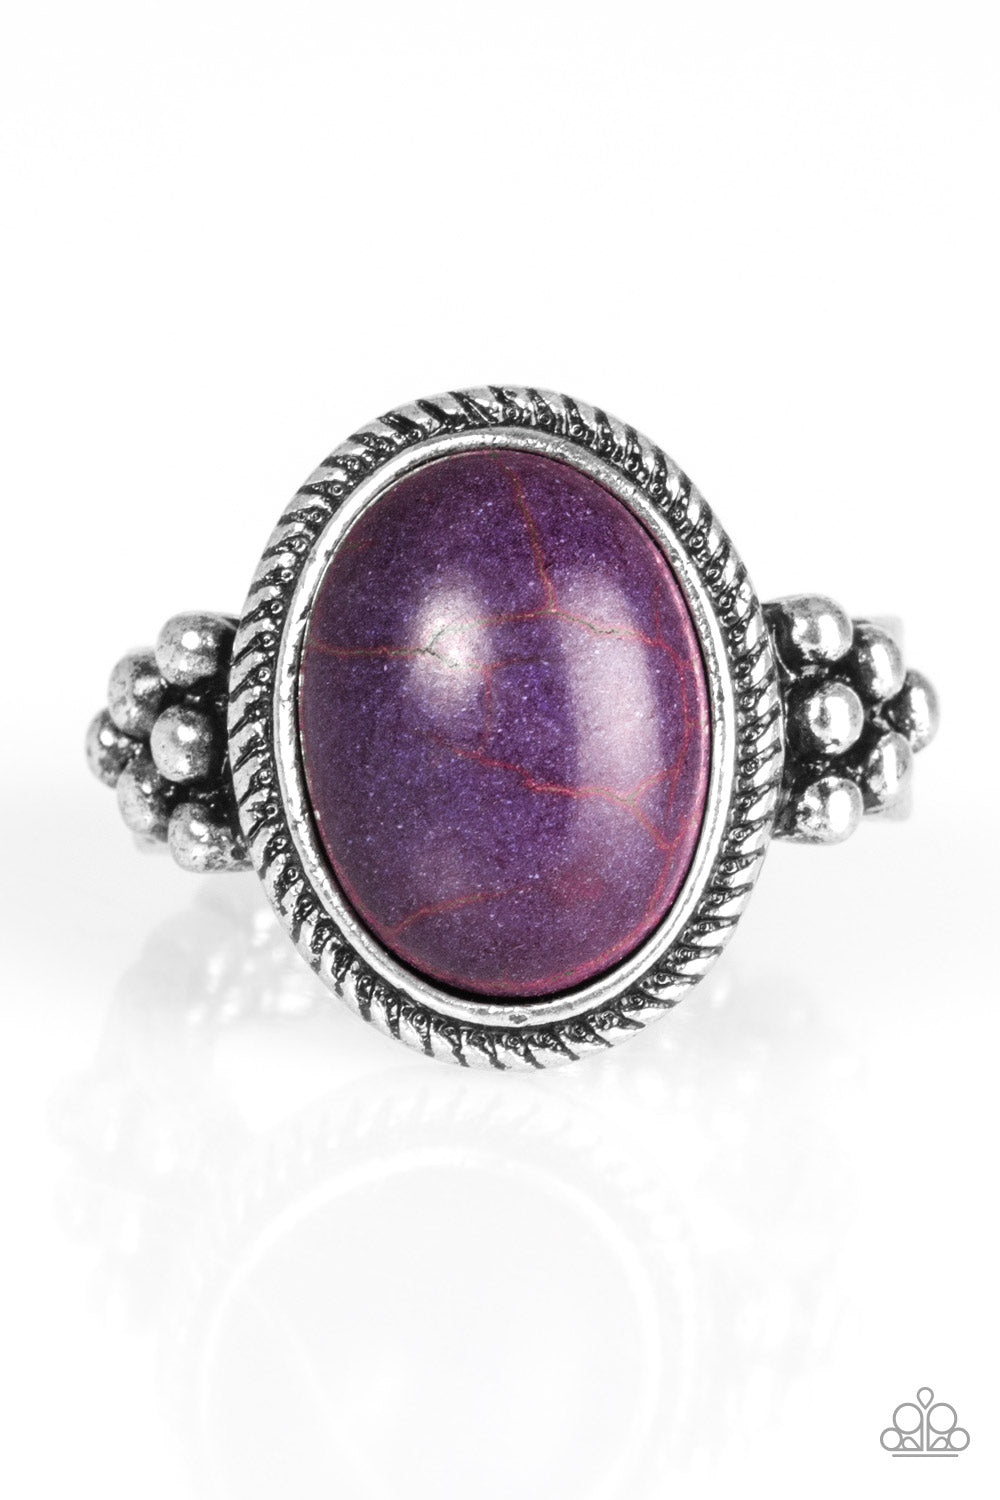 stone-age-sophistication-purple-p4se-prxx-039xx